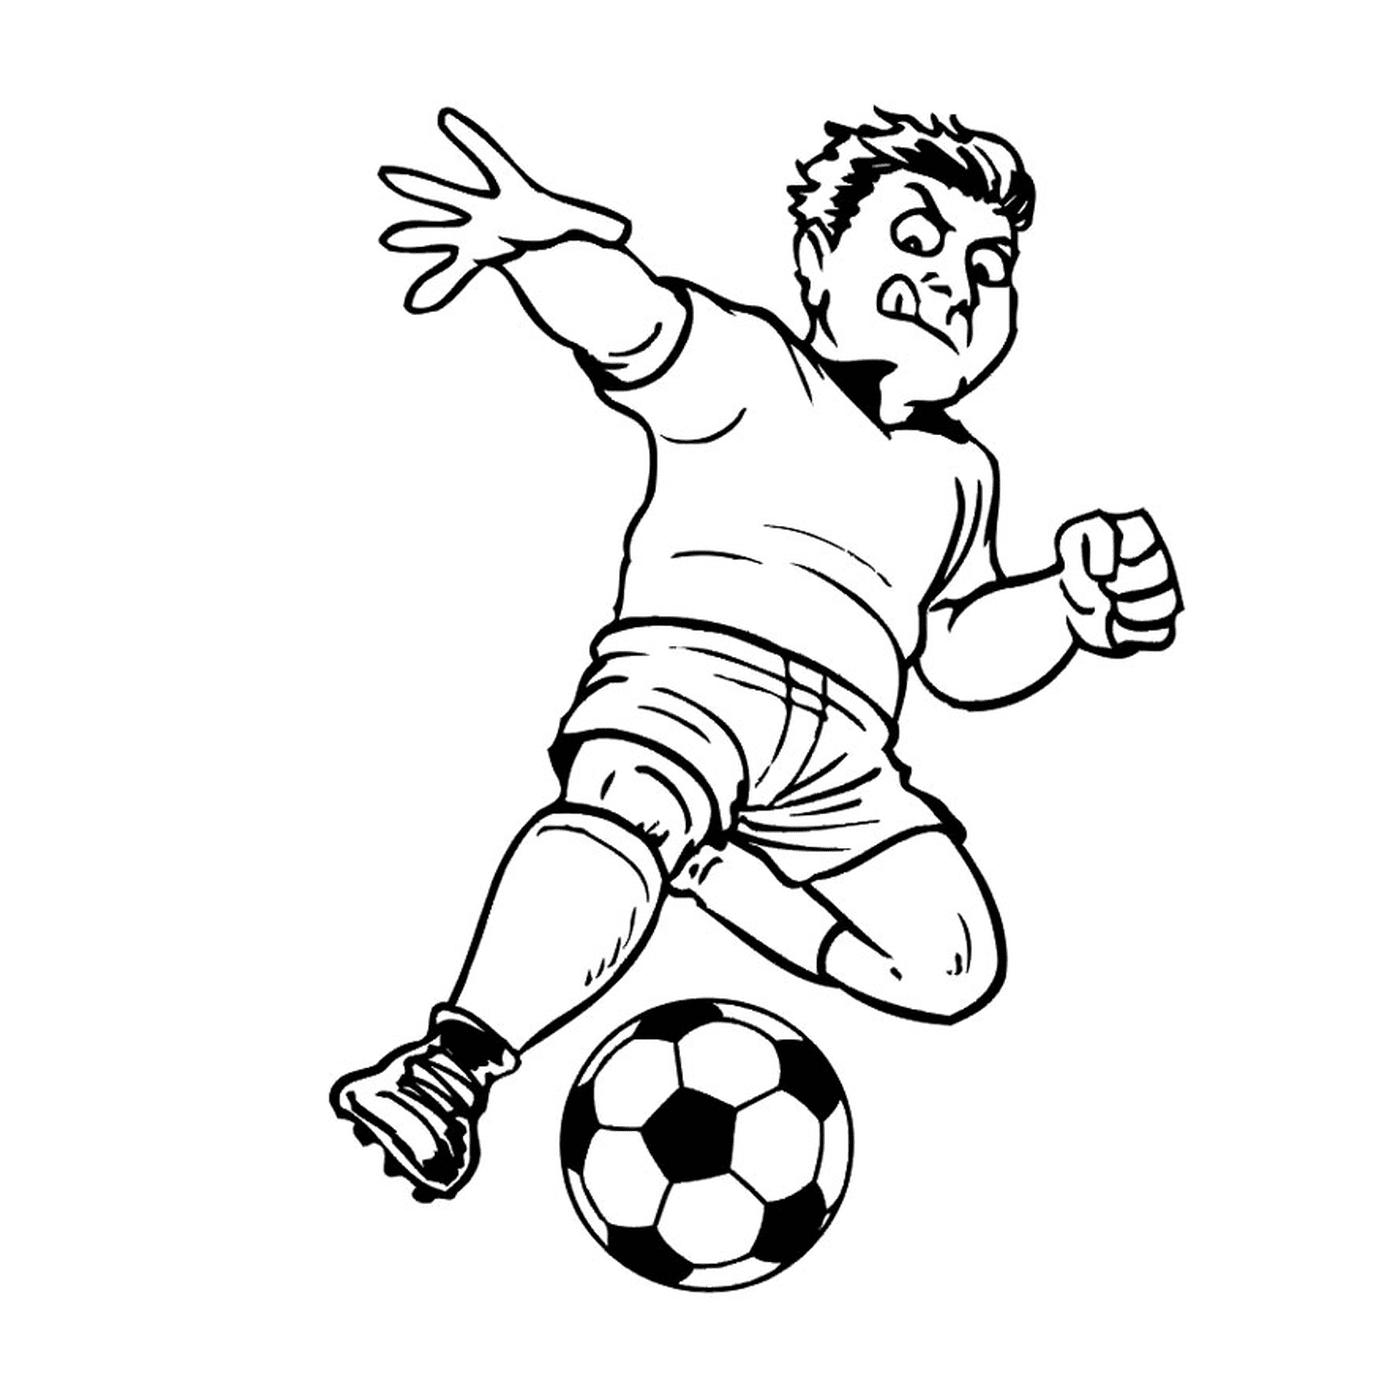  A man plays football 